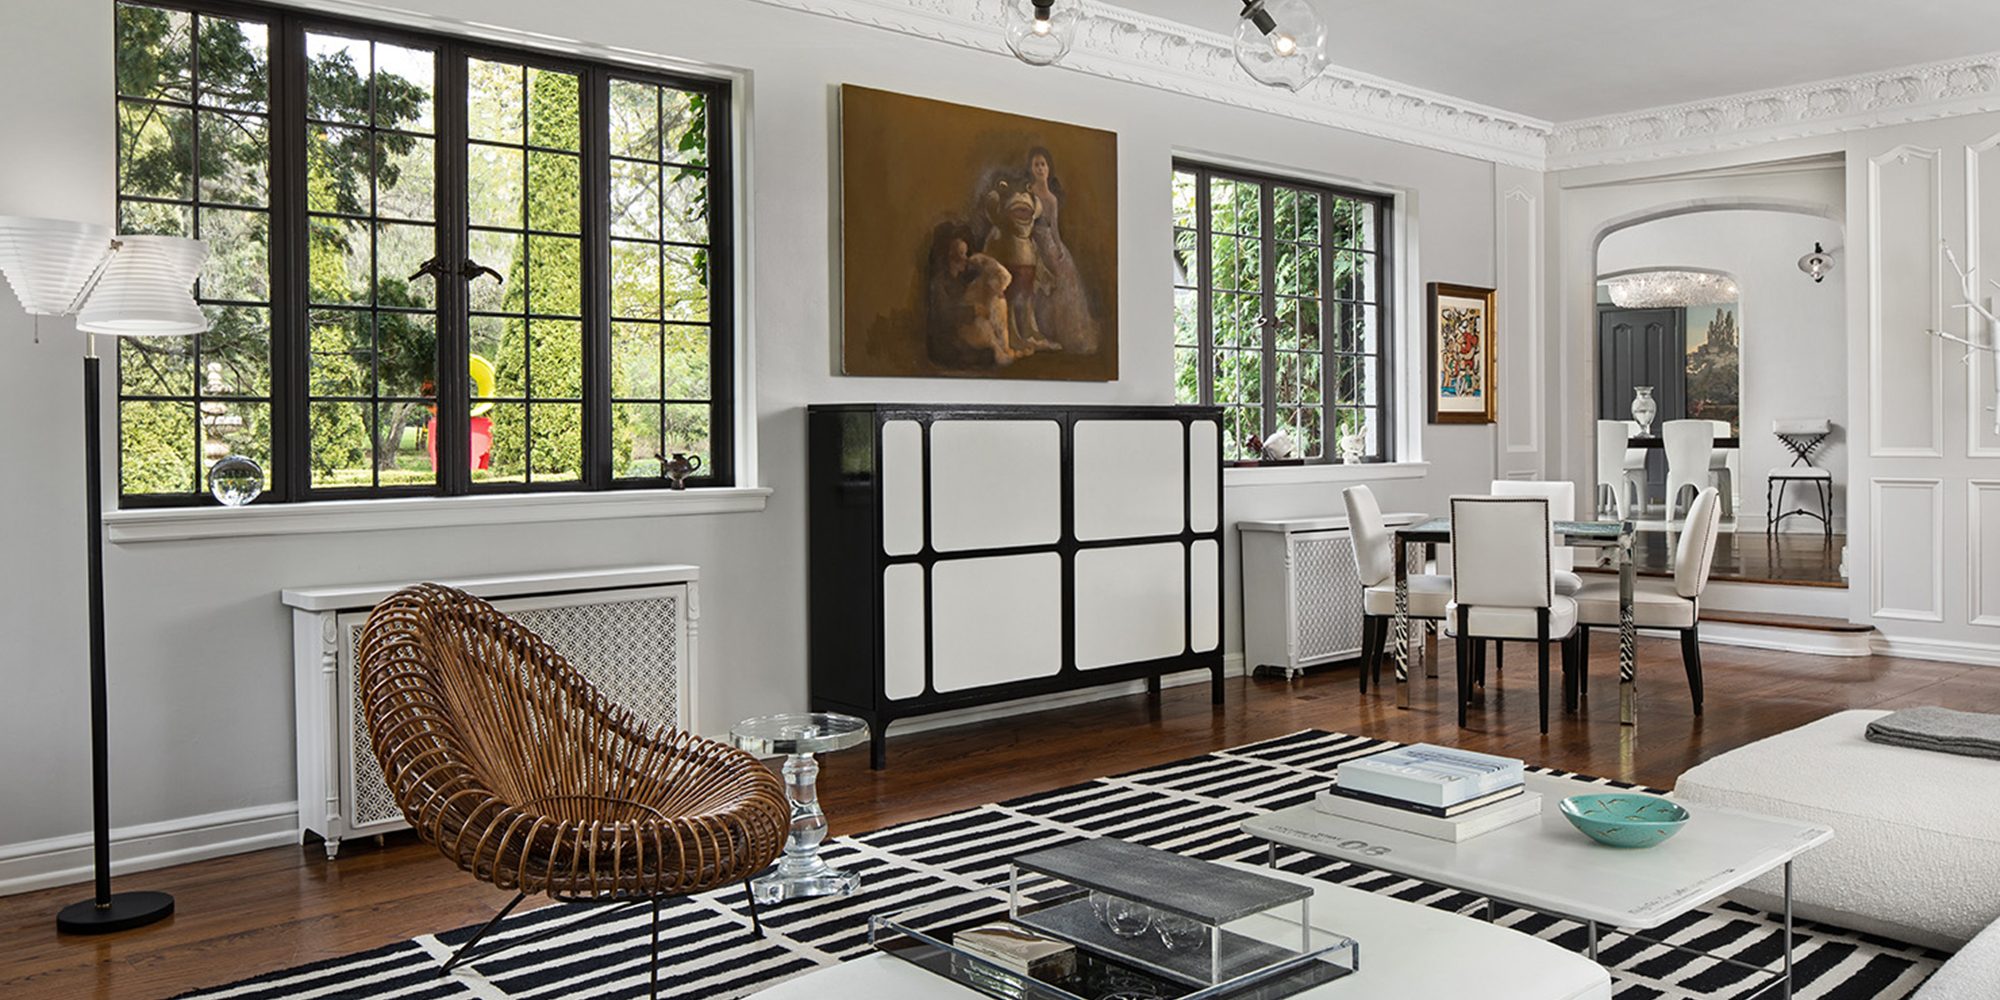 Orchard Ridge Featured Image Living Room Black White Scandinavian influenced design